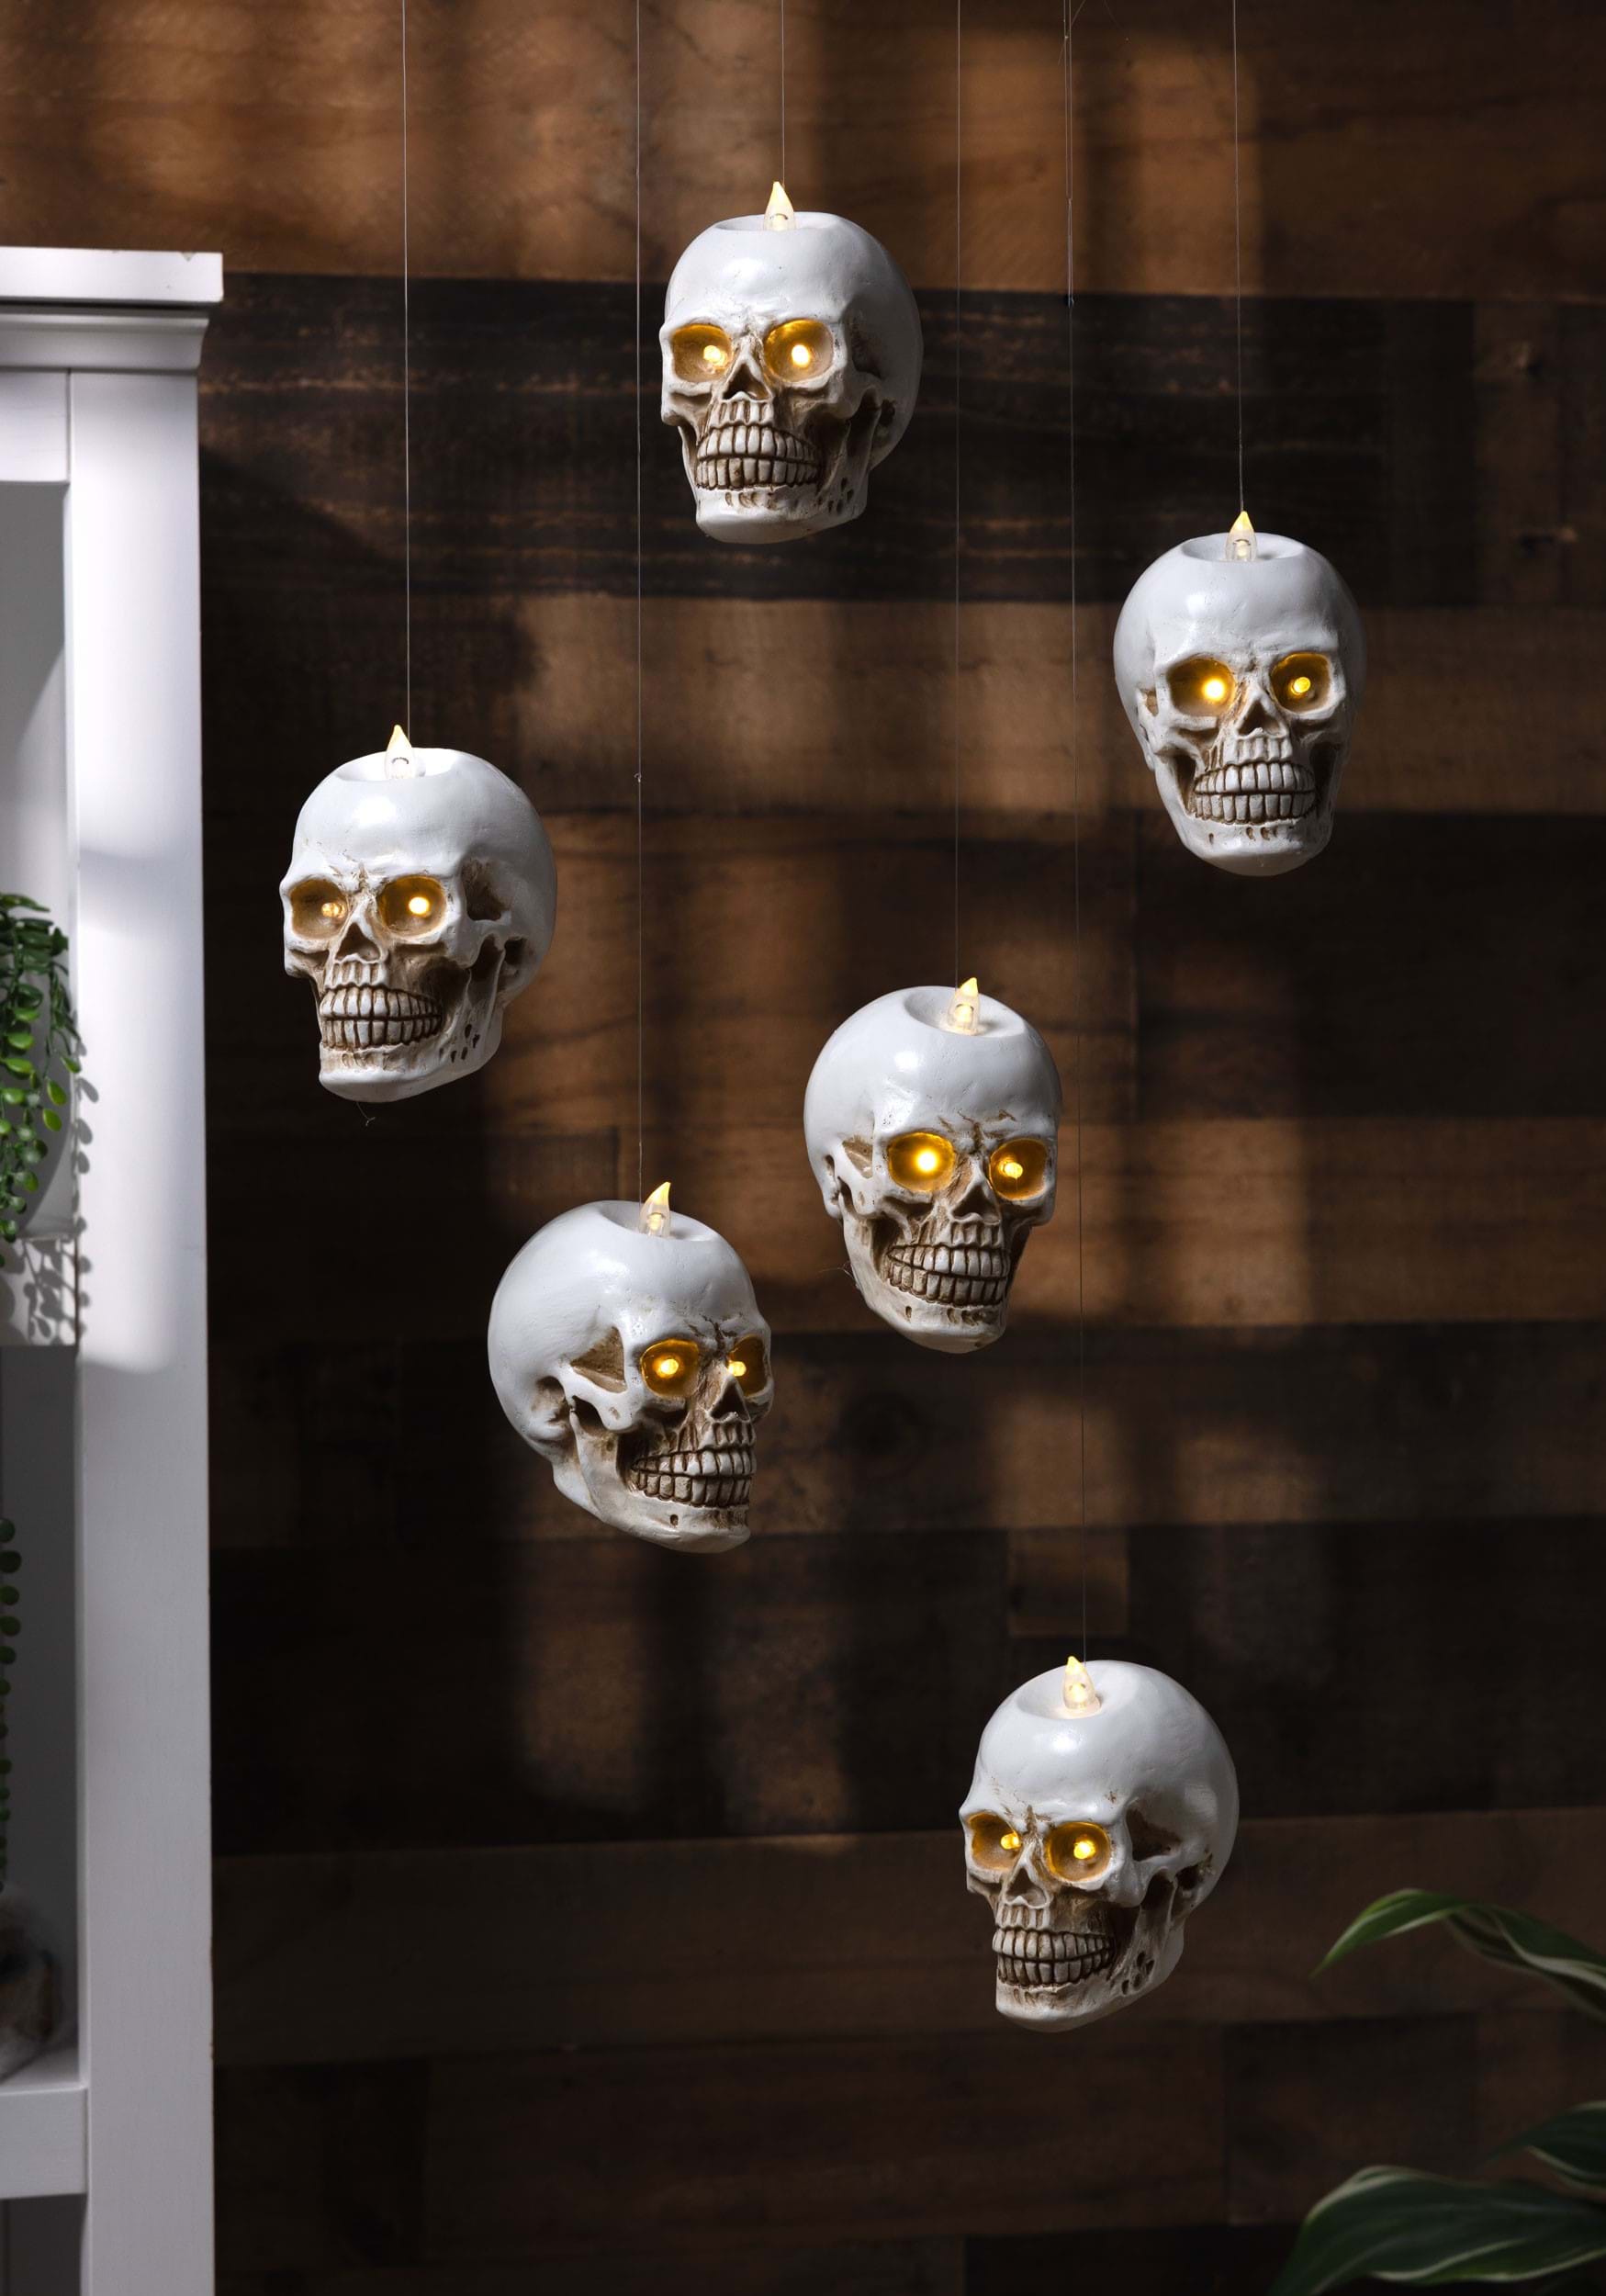 6 Light Up Hanging Skulls Prop With Remote Control , Halloween Lights